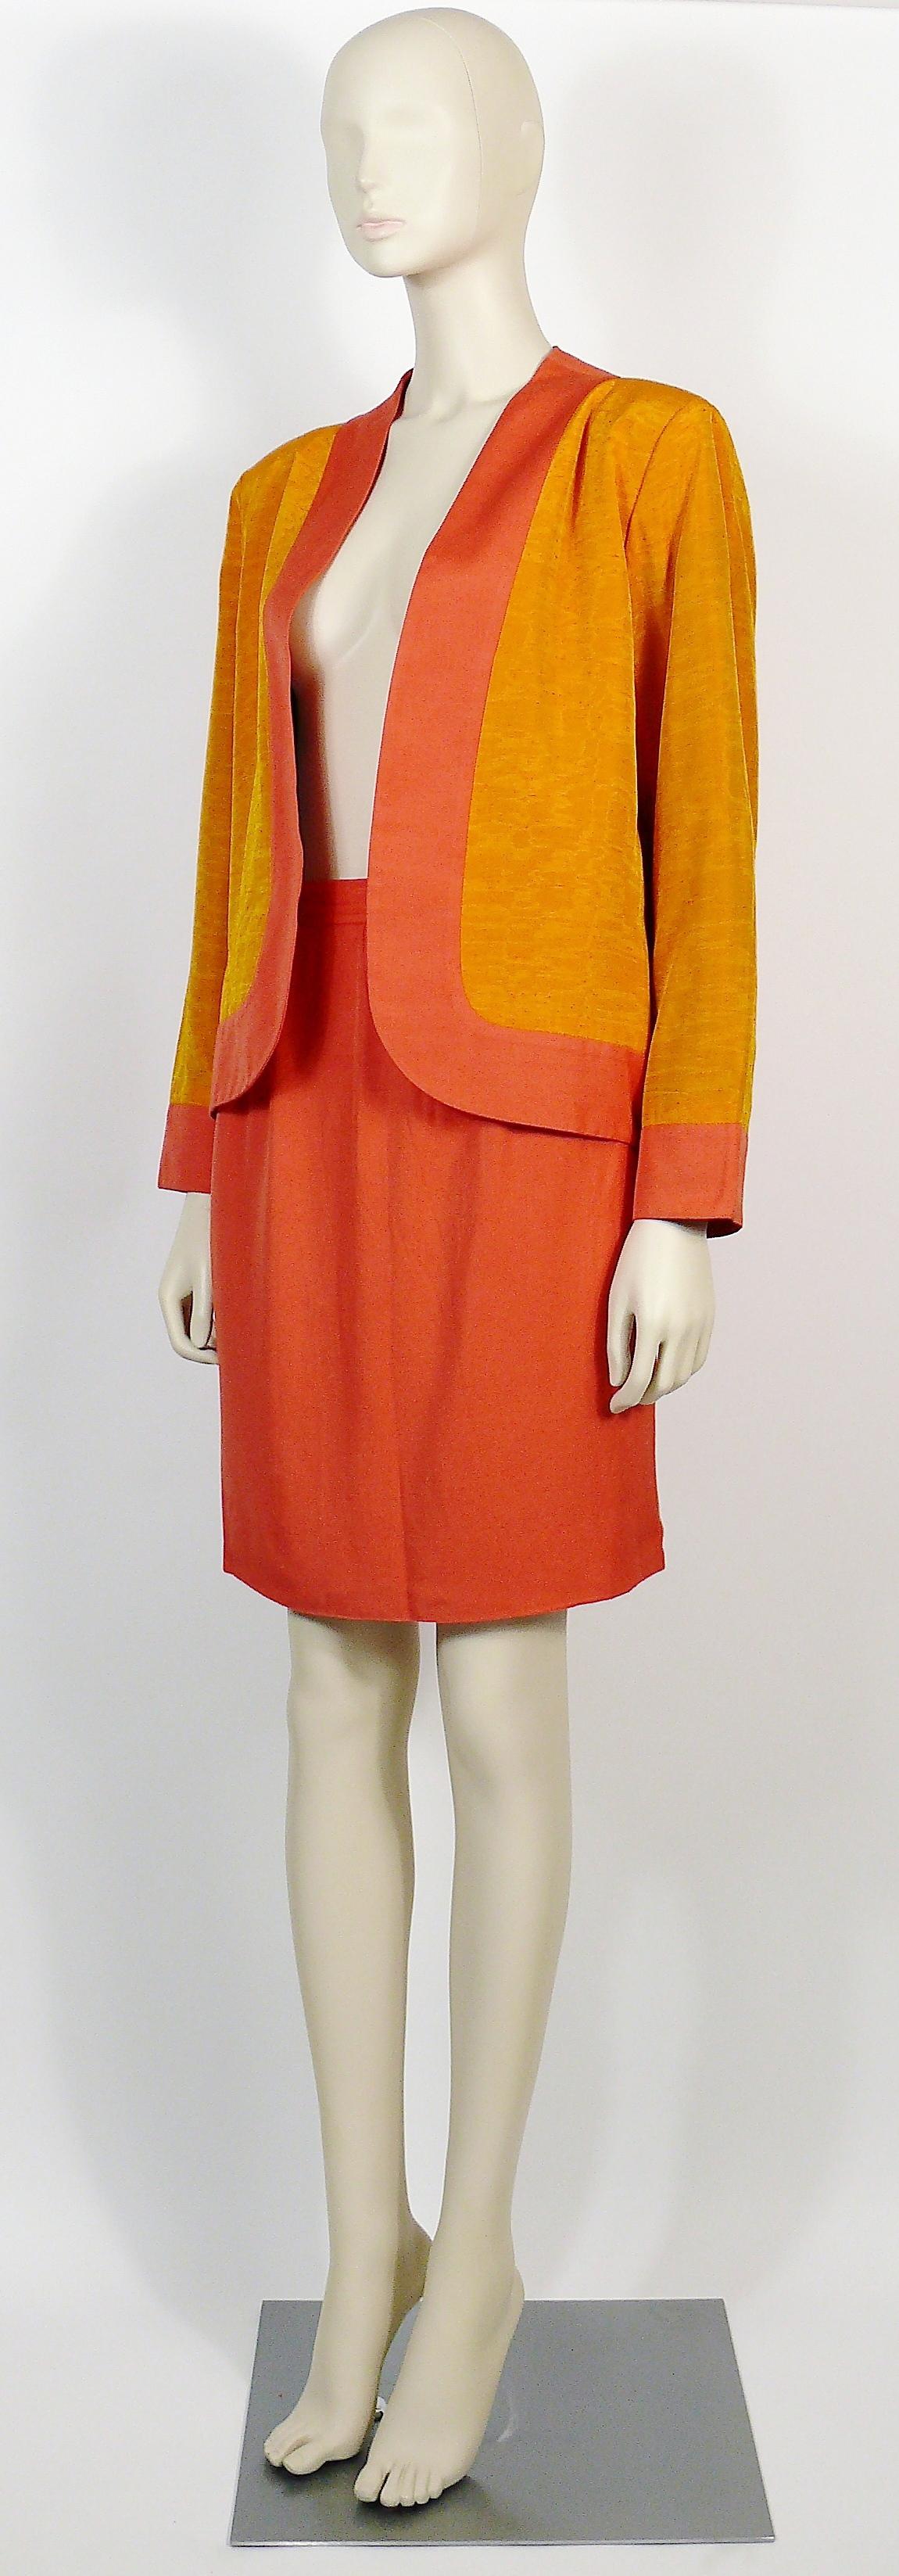 Yves Saint Laurent YSL Oriental Inspired Jacket and Skirt Ensemble For Sale 2